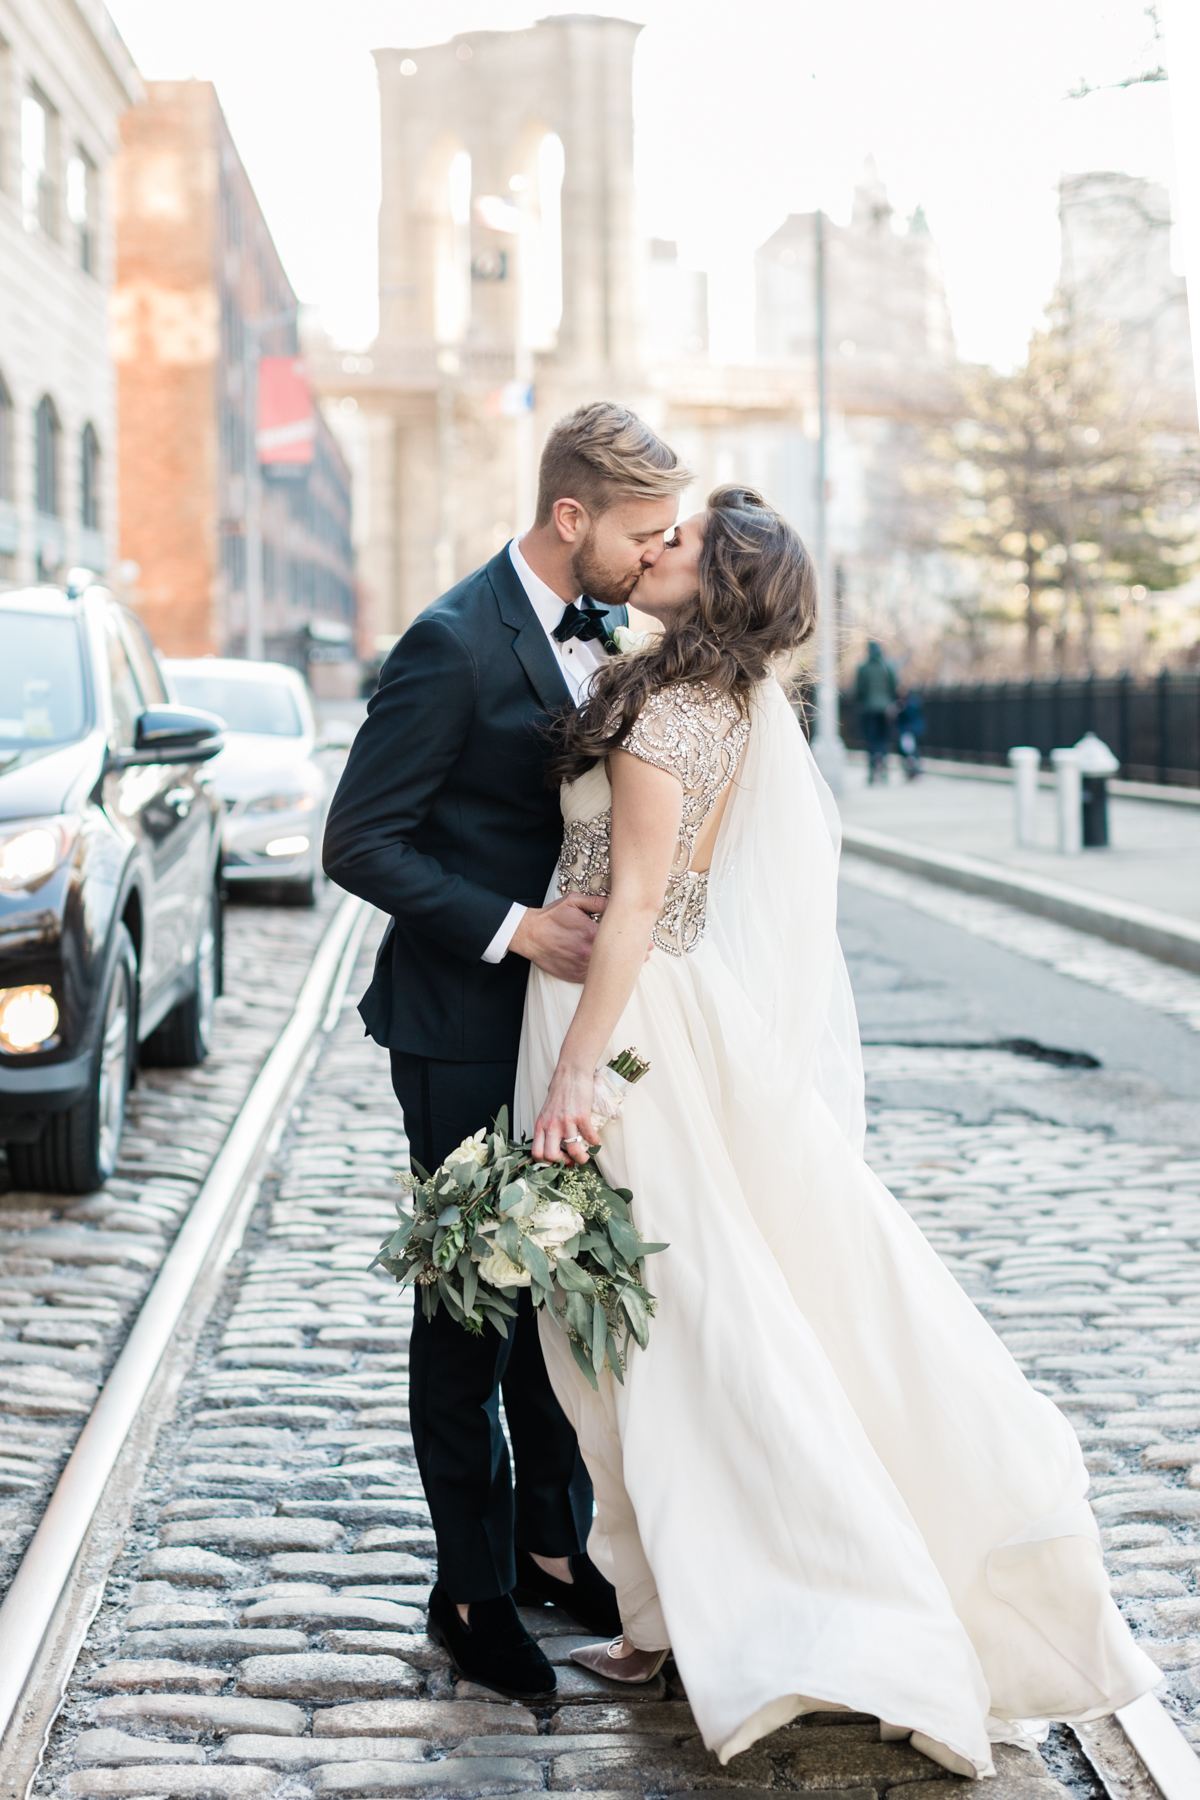 New York City wedding photographer | Brooklyn bridge wedding photos | DUMBO wedding photos | Bride and groom in Brooklyn